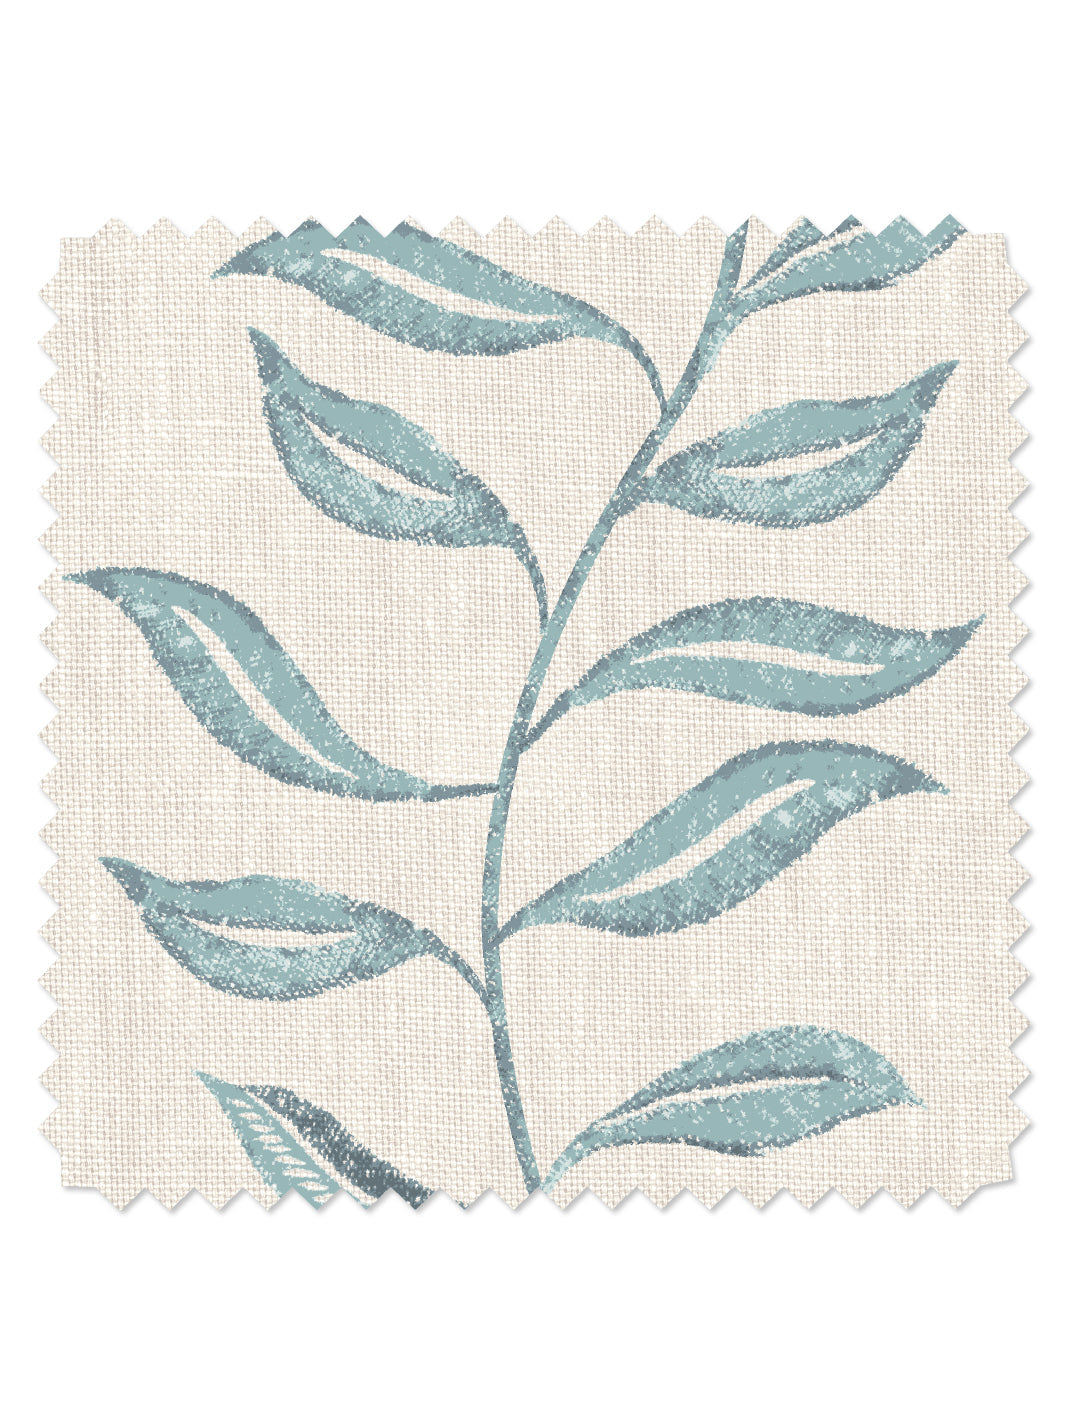 'Seneca' Linen Fabric by Nathan Turner - Seafoam